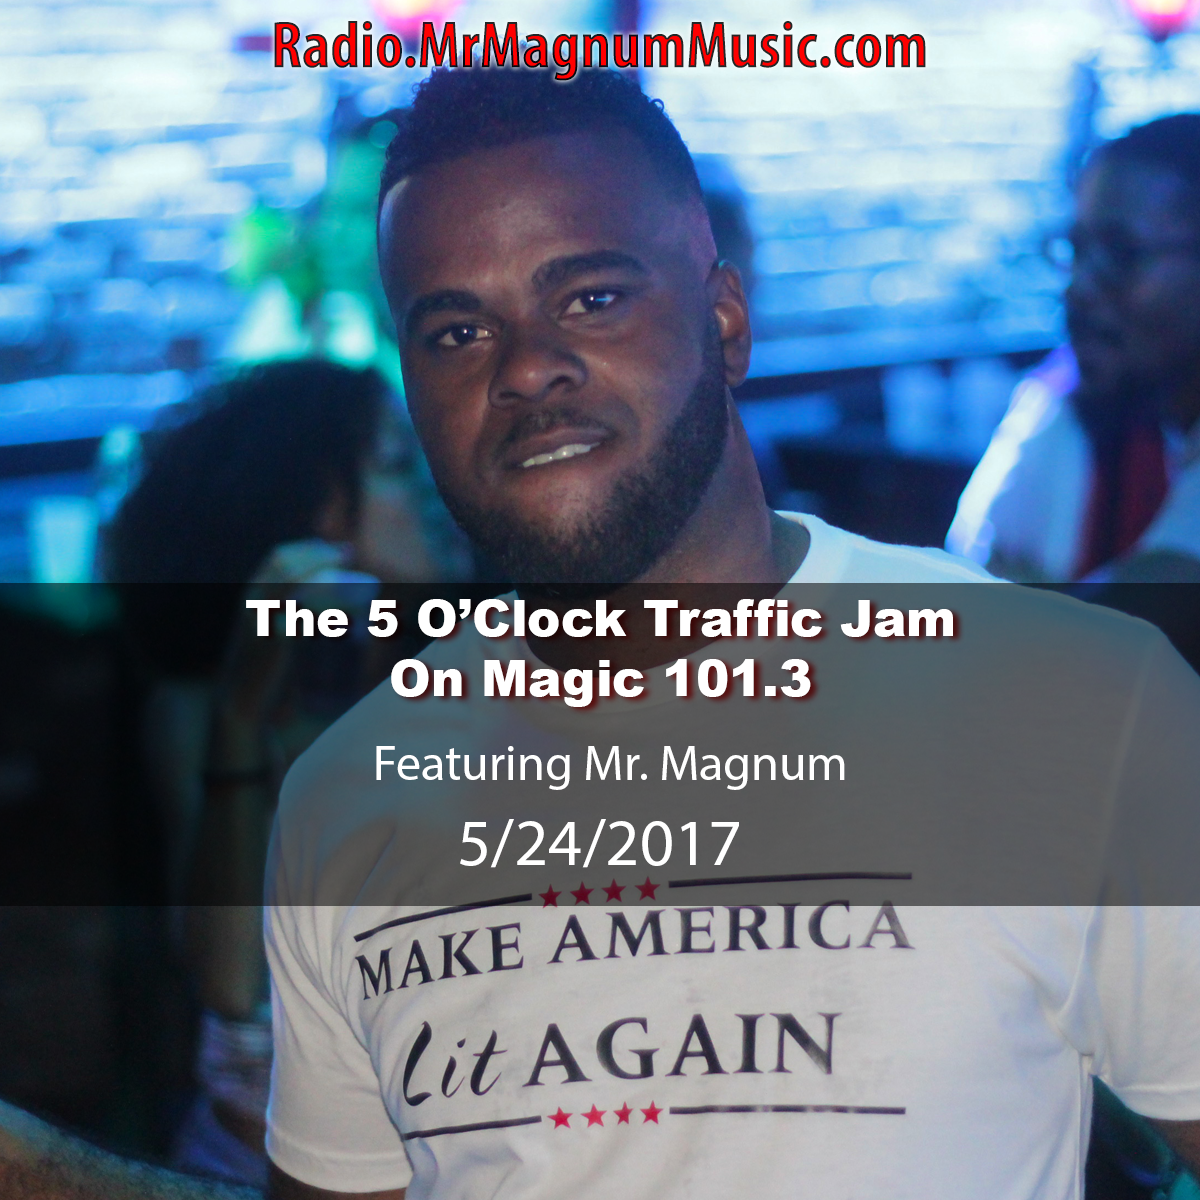 The 5 O'Clock Traffic Jam 20170524 featuring Gainesville's #1 DJ, Mr. Magnum on Magic 101.3